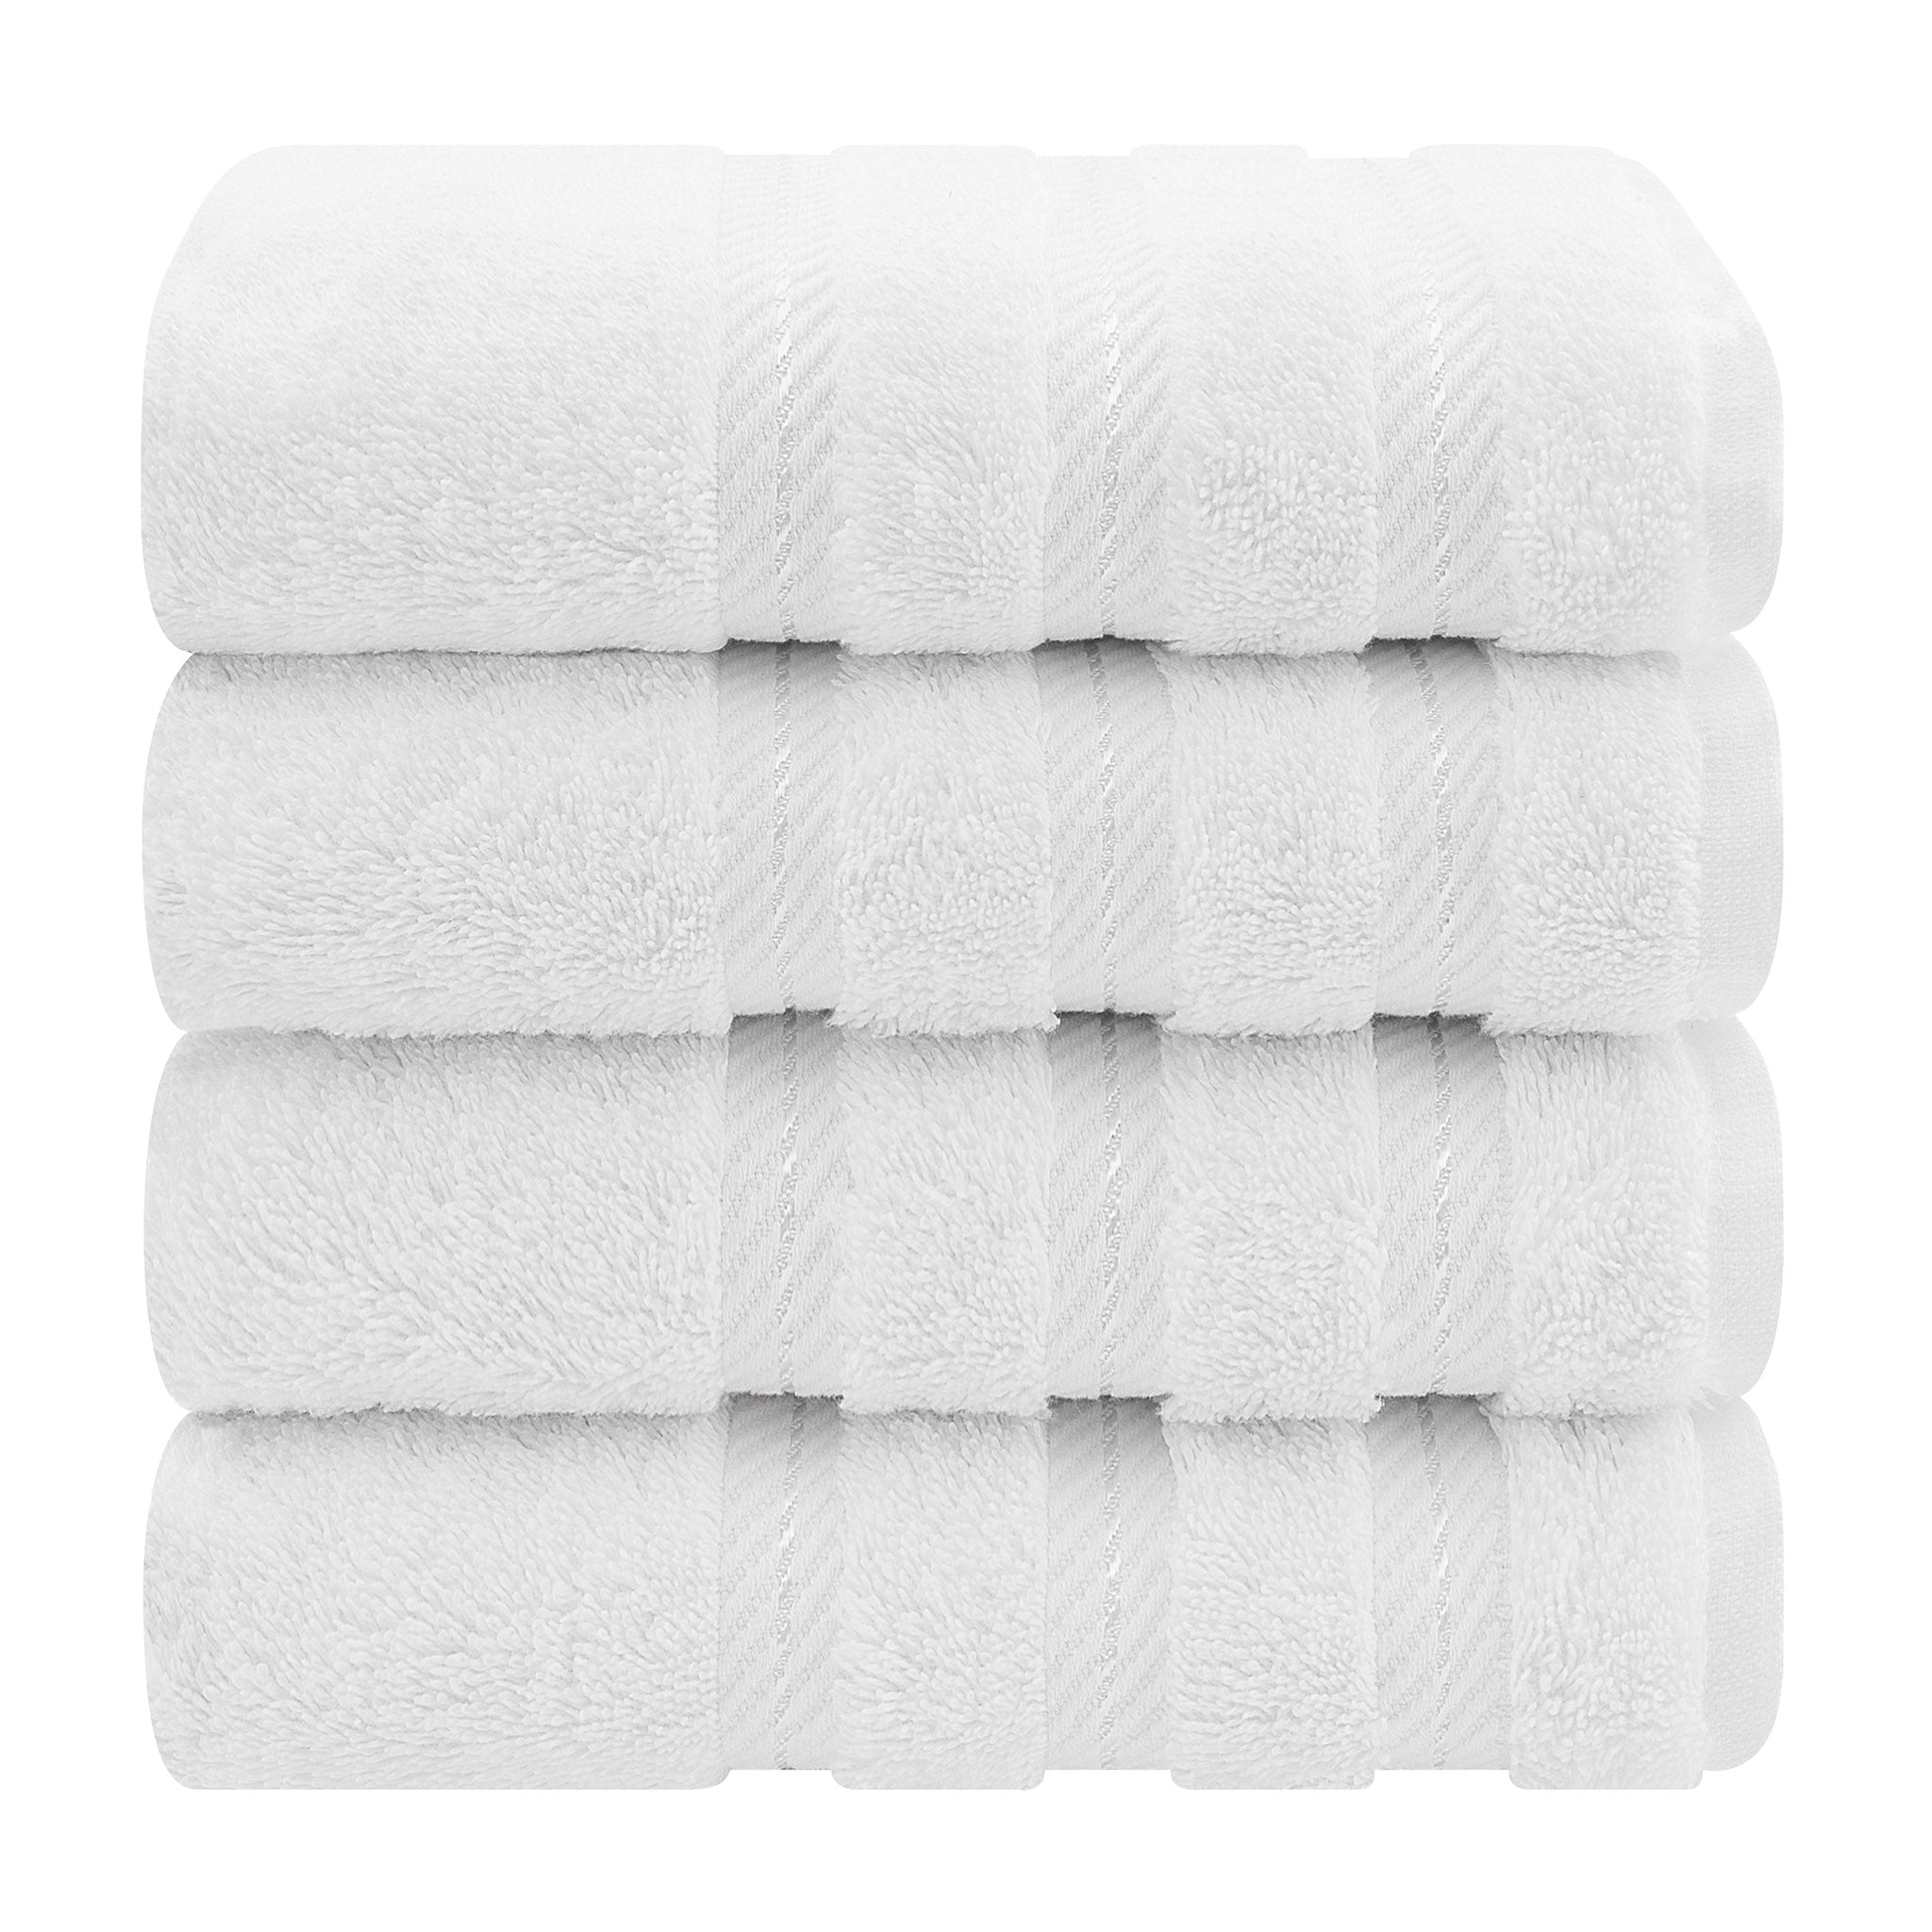  American Soft Linen 100% Turkish Cotton 4 Pack Hand Towel Set  white-7